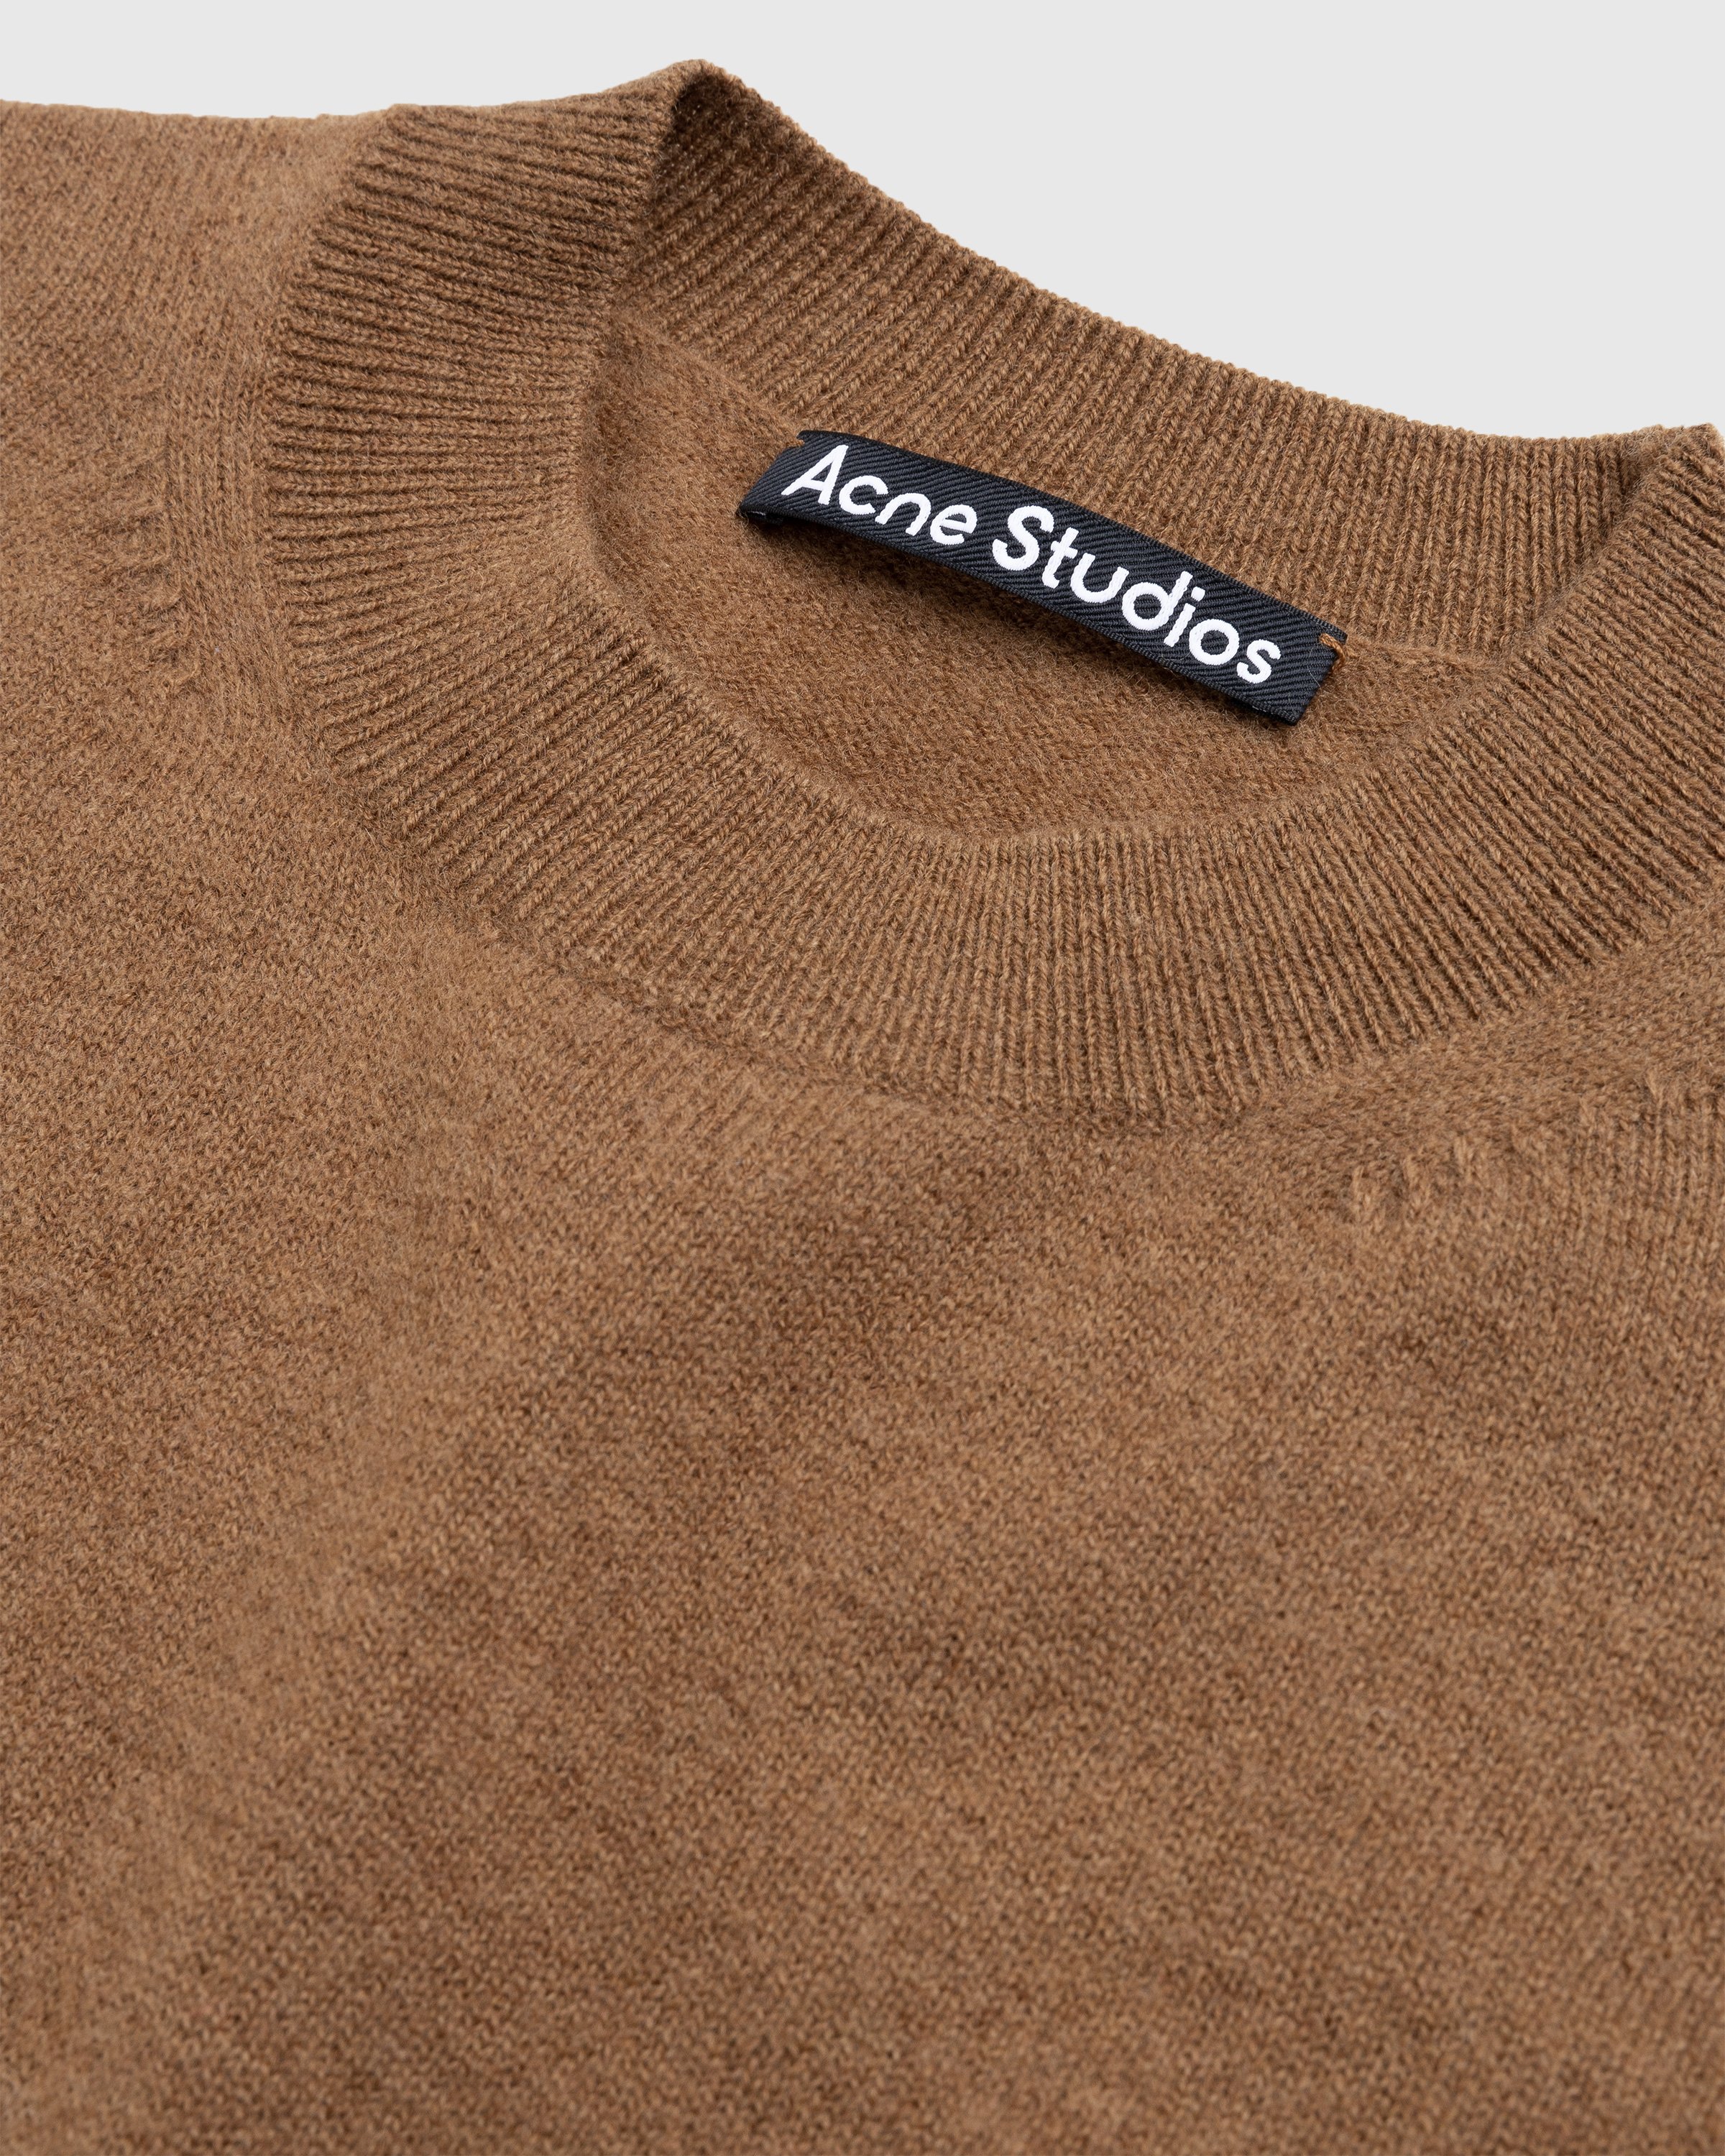 Acne Studios - Wool Crewneck Sweater Toffee Brown - Clothing - Brown - Image 5